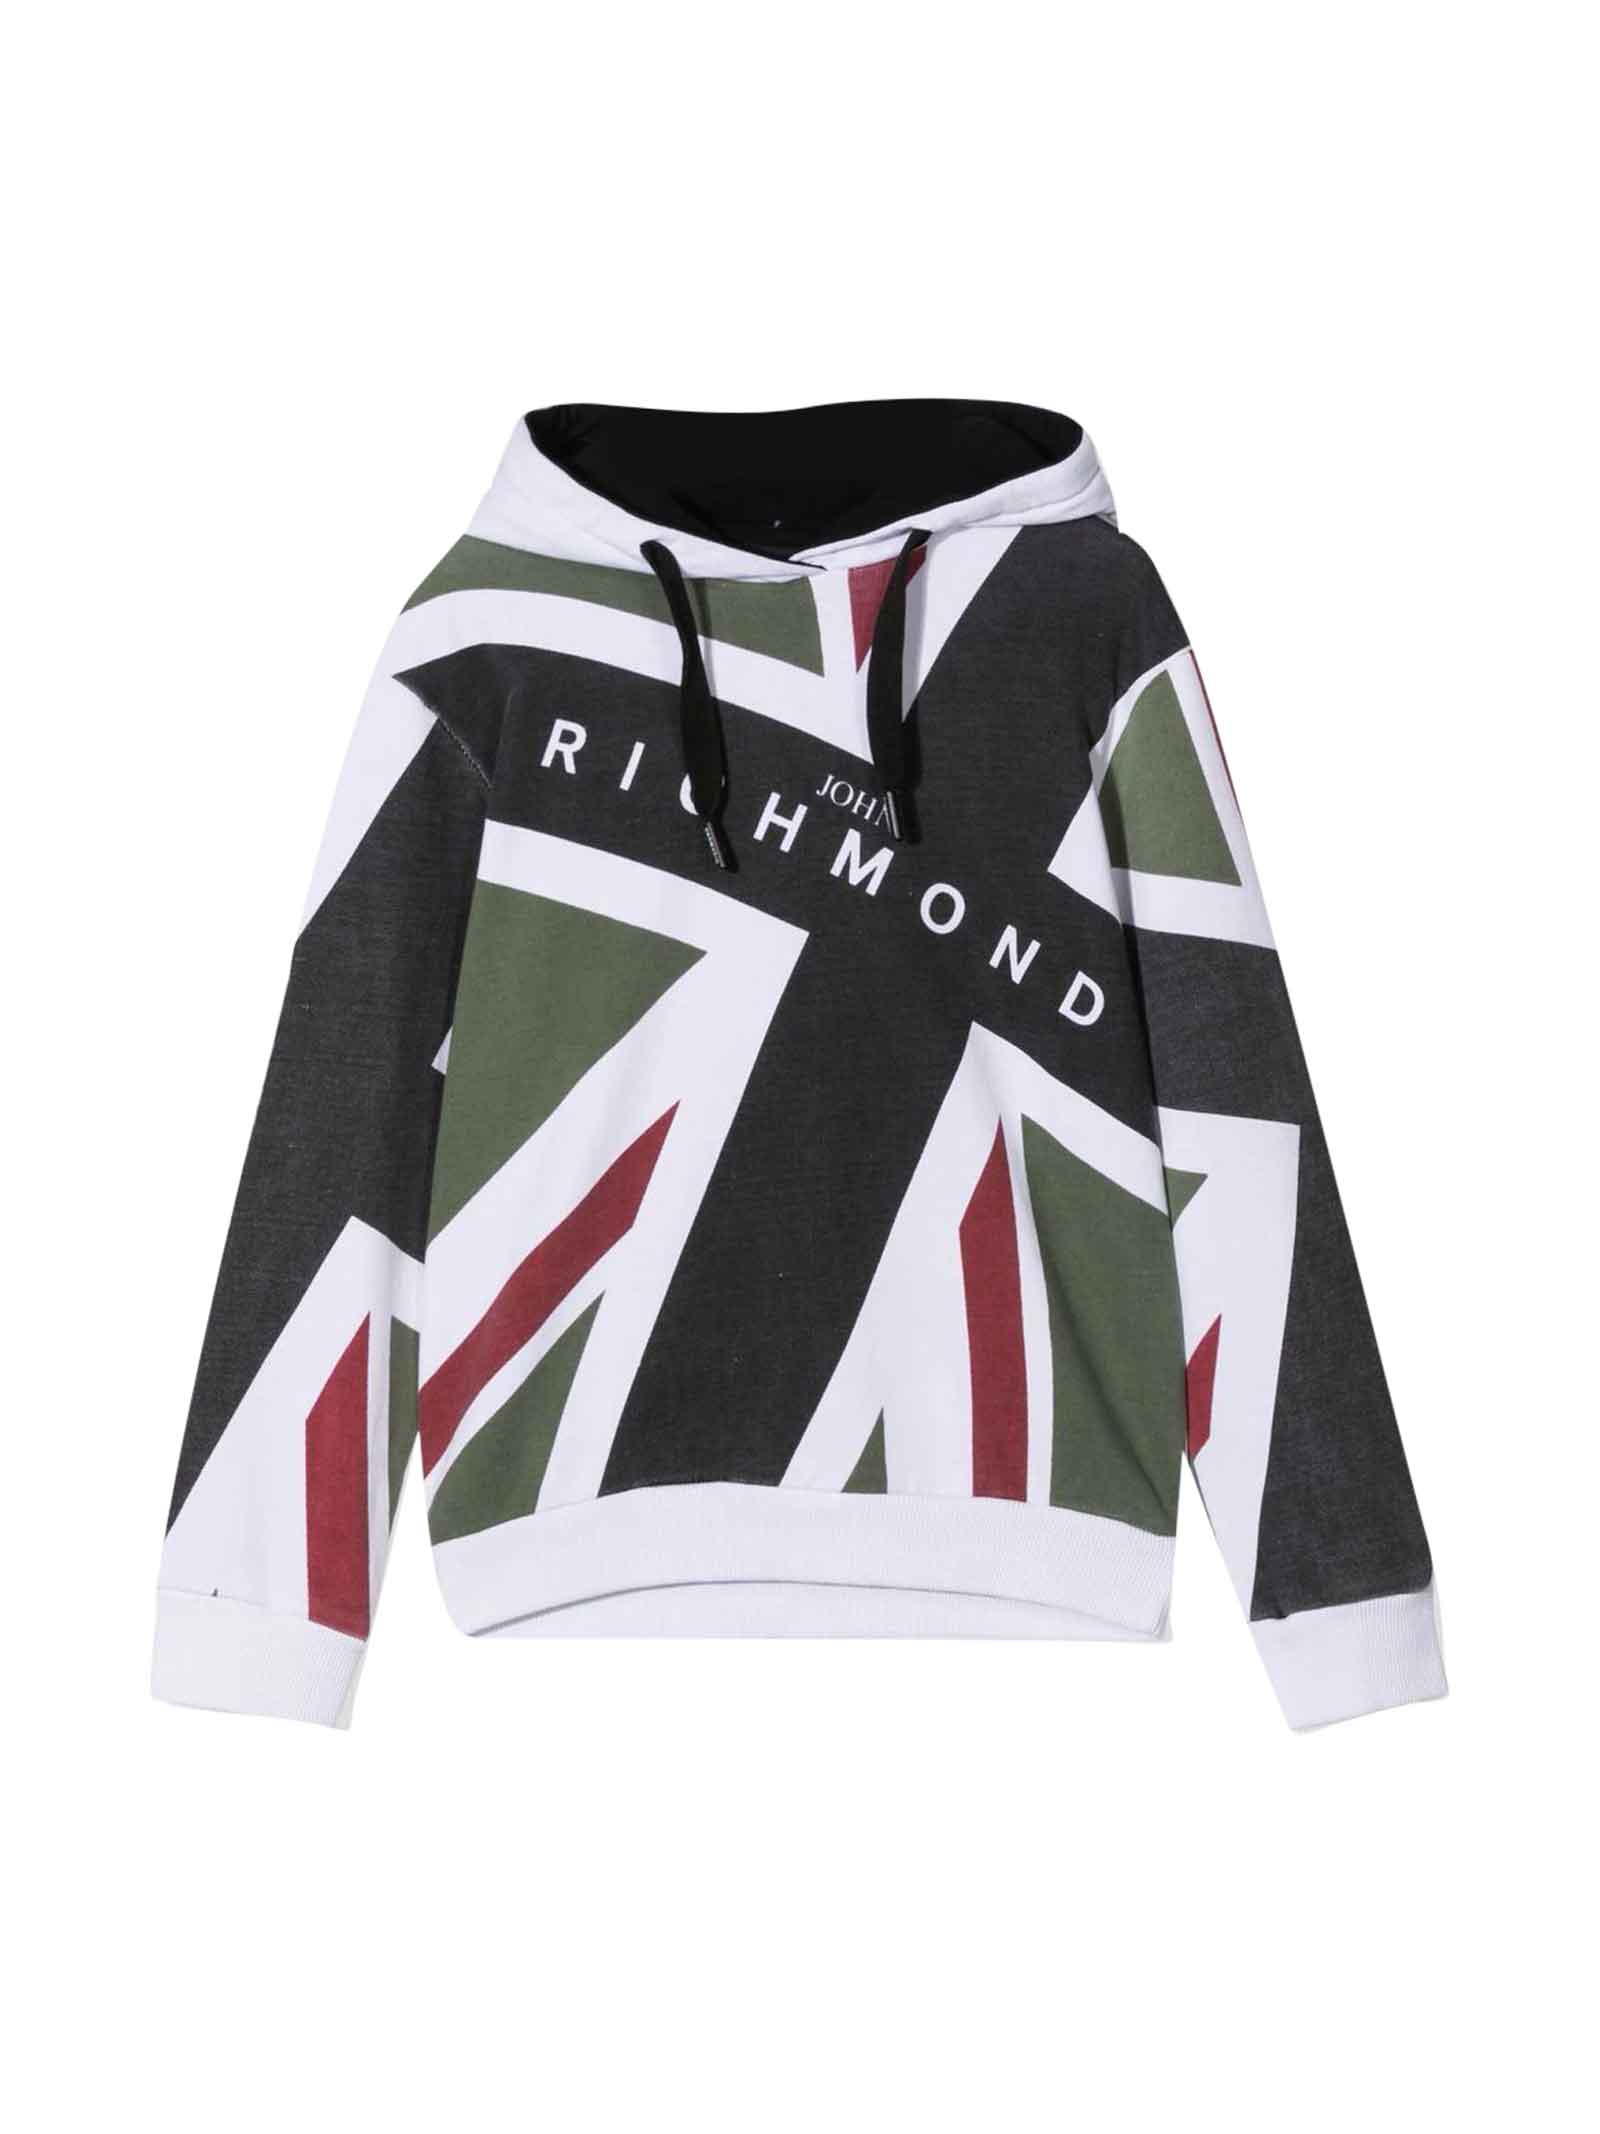 John Richmond White Sweatshirt With Print And Hood